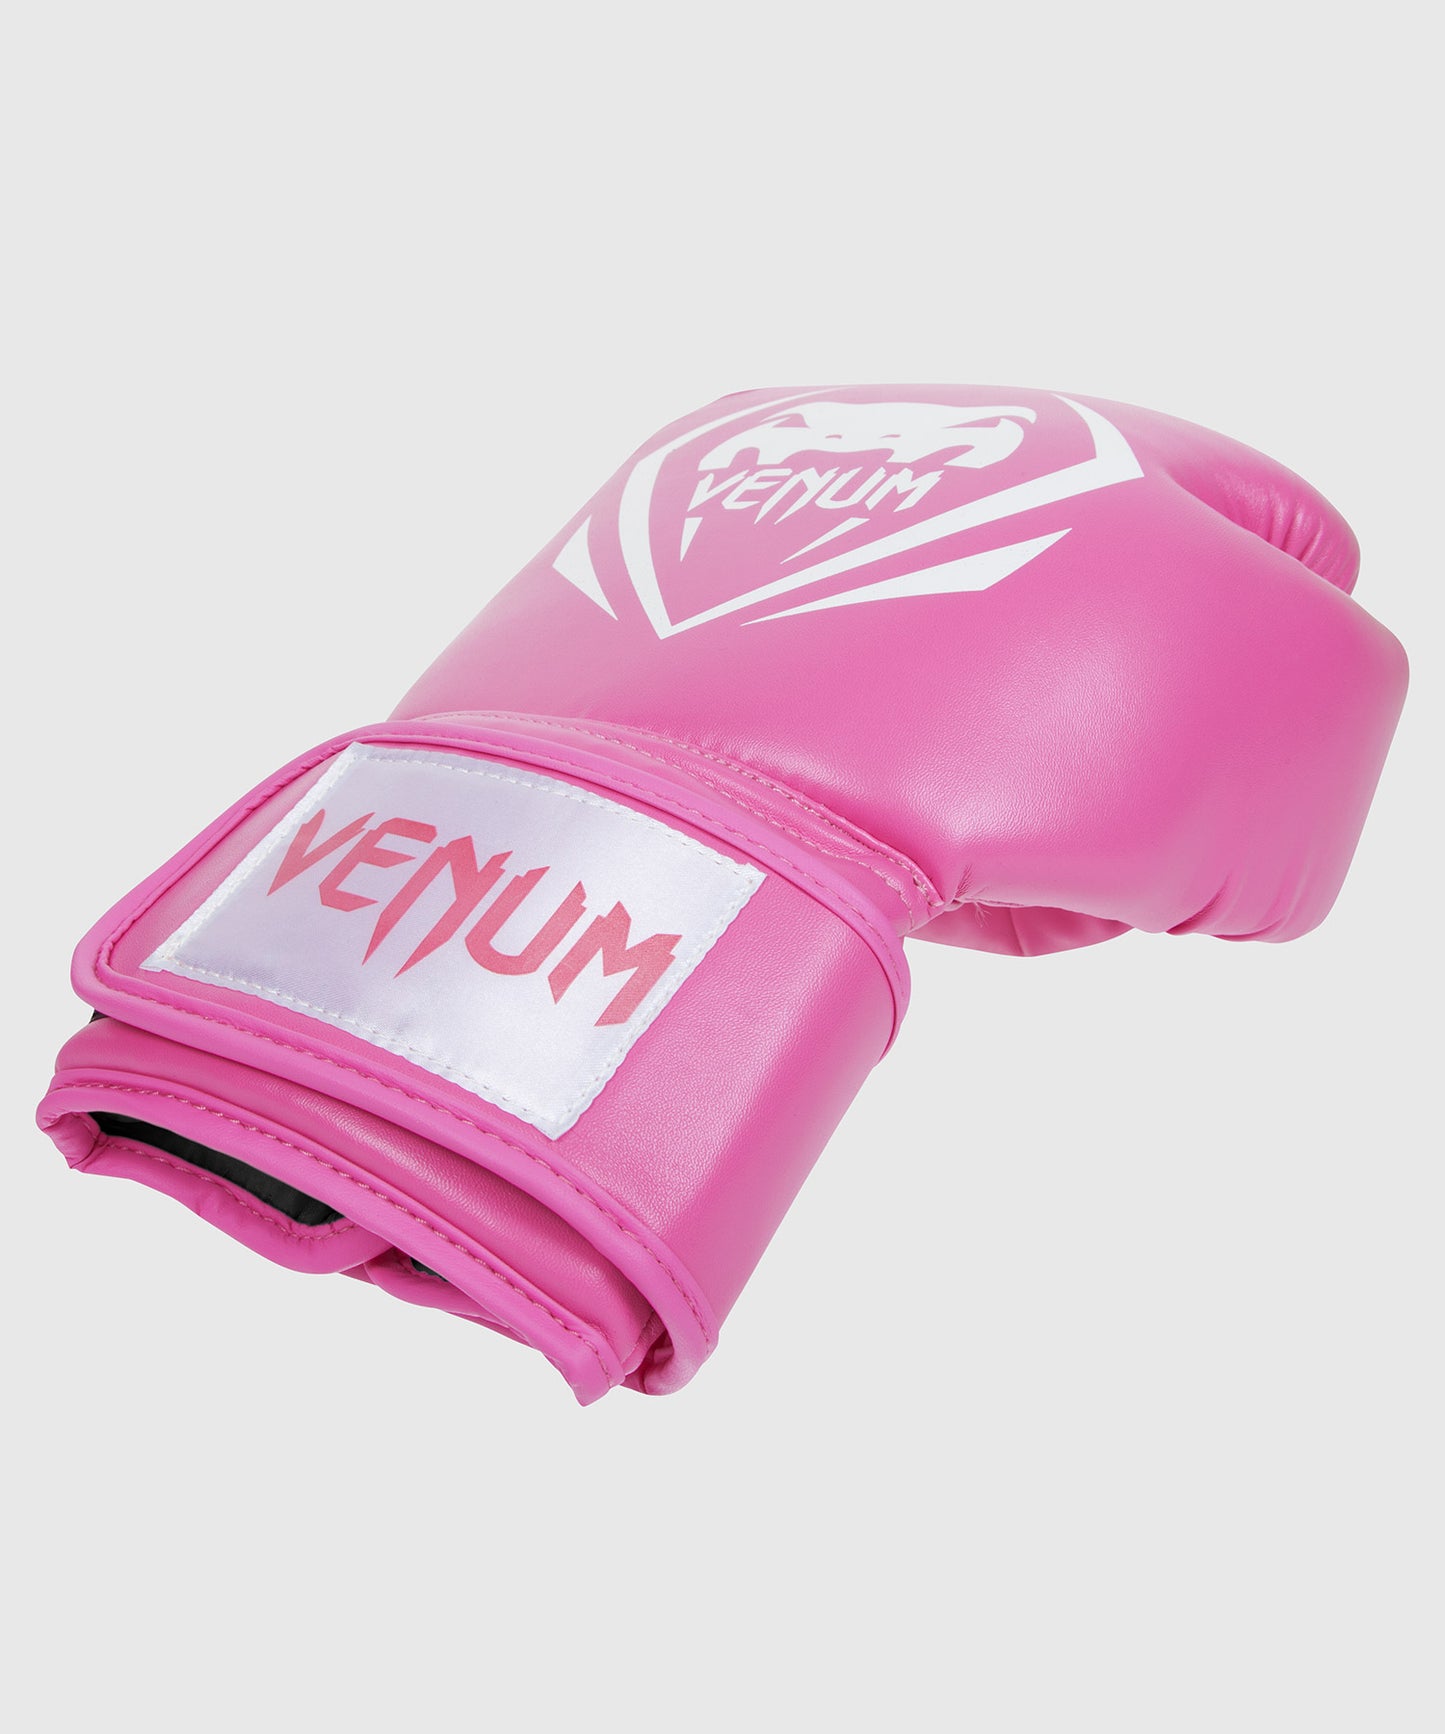 Venum Contender Boxing Gloves - Pink